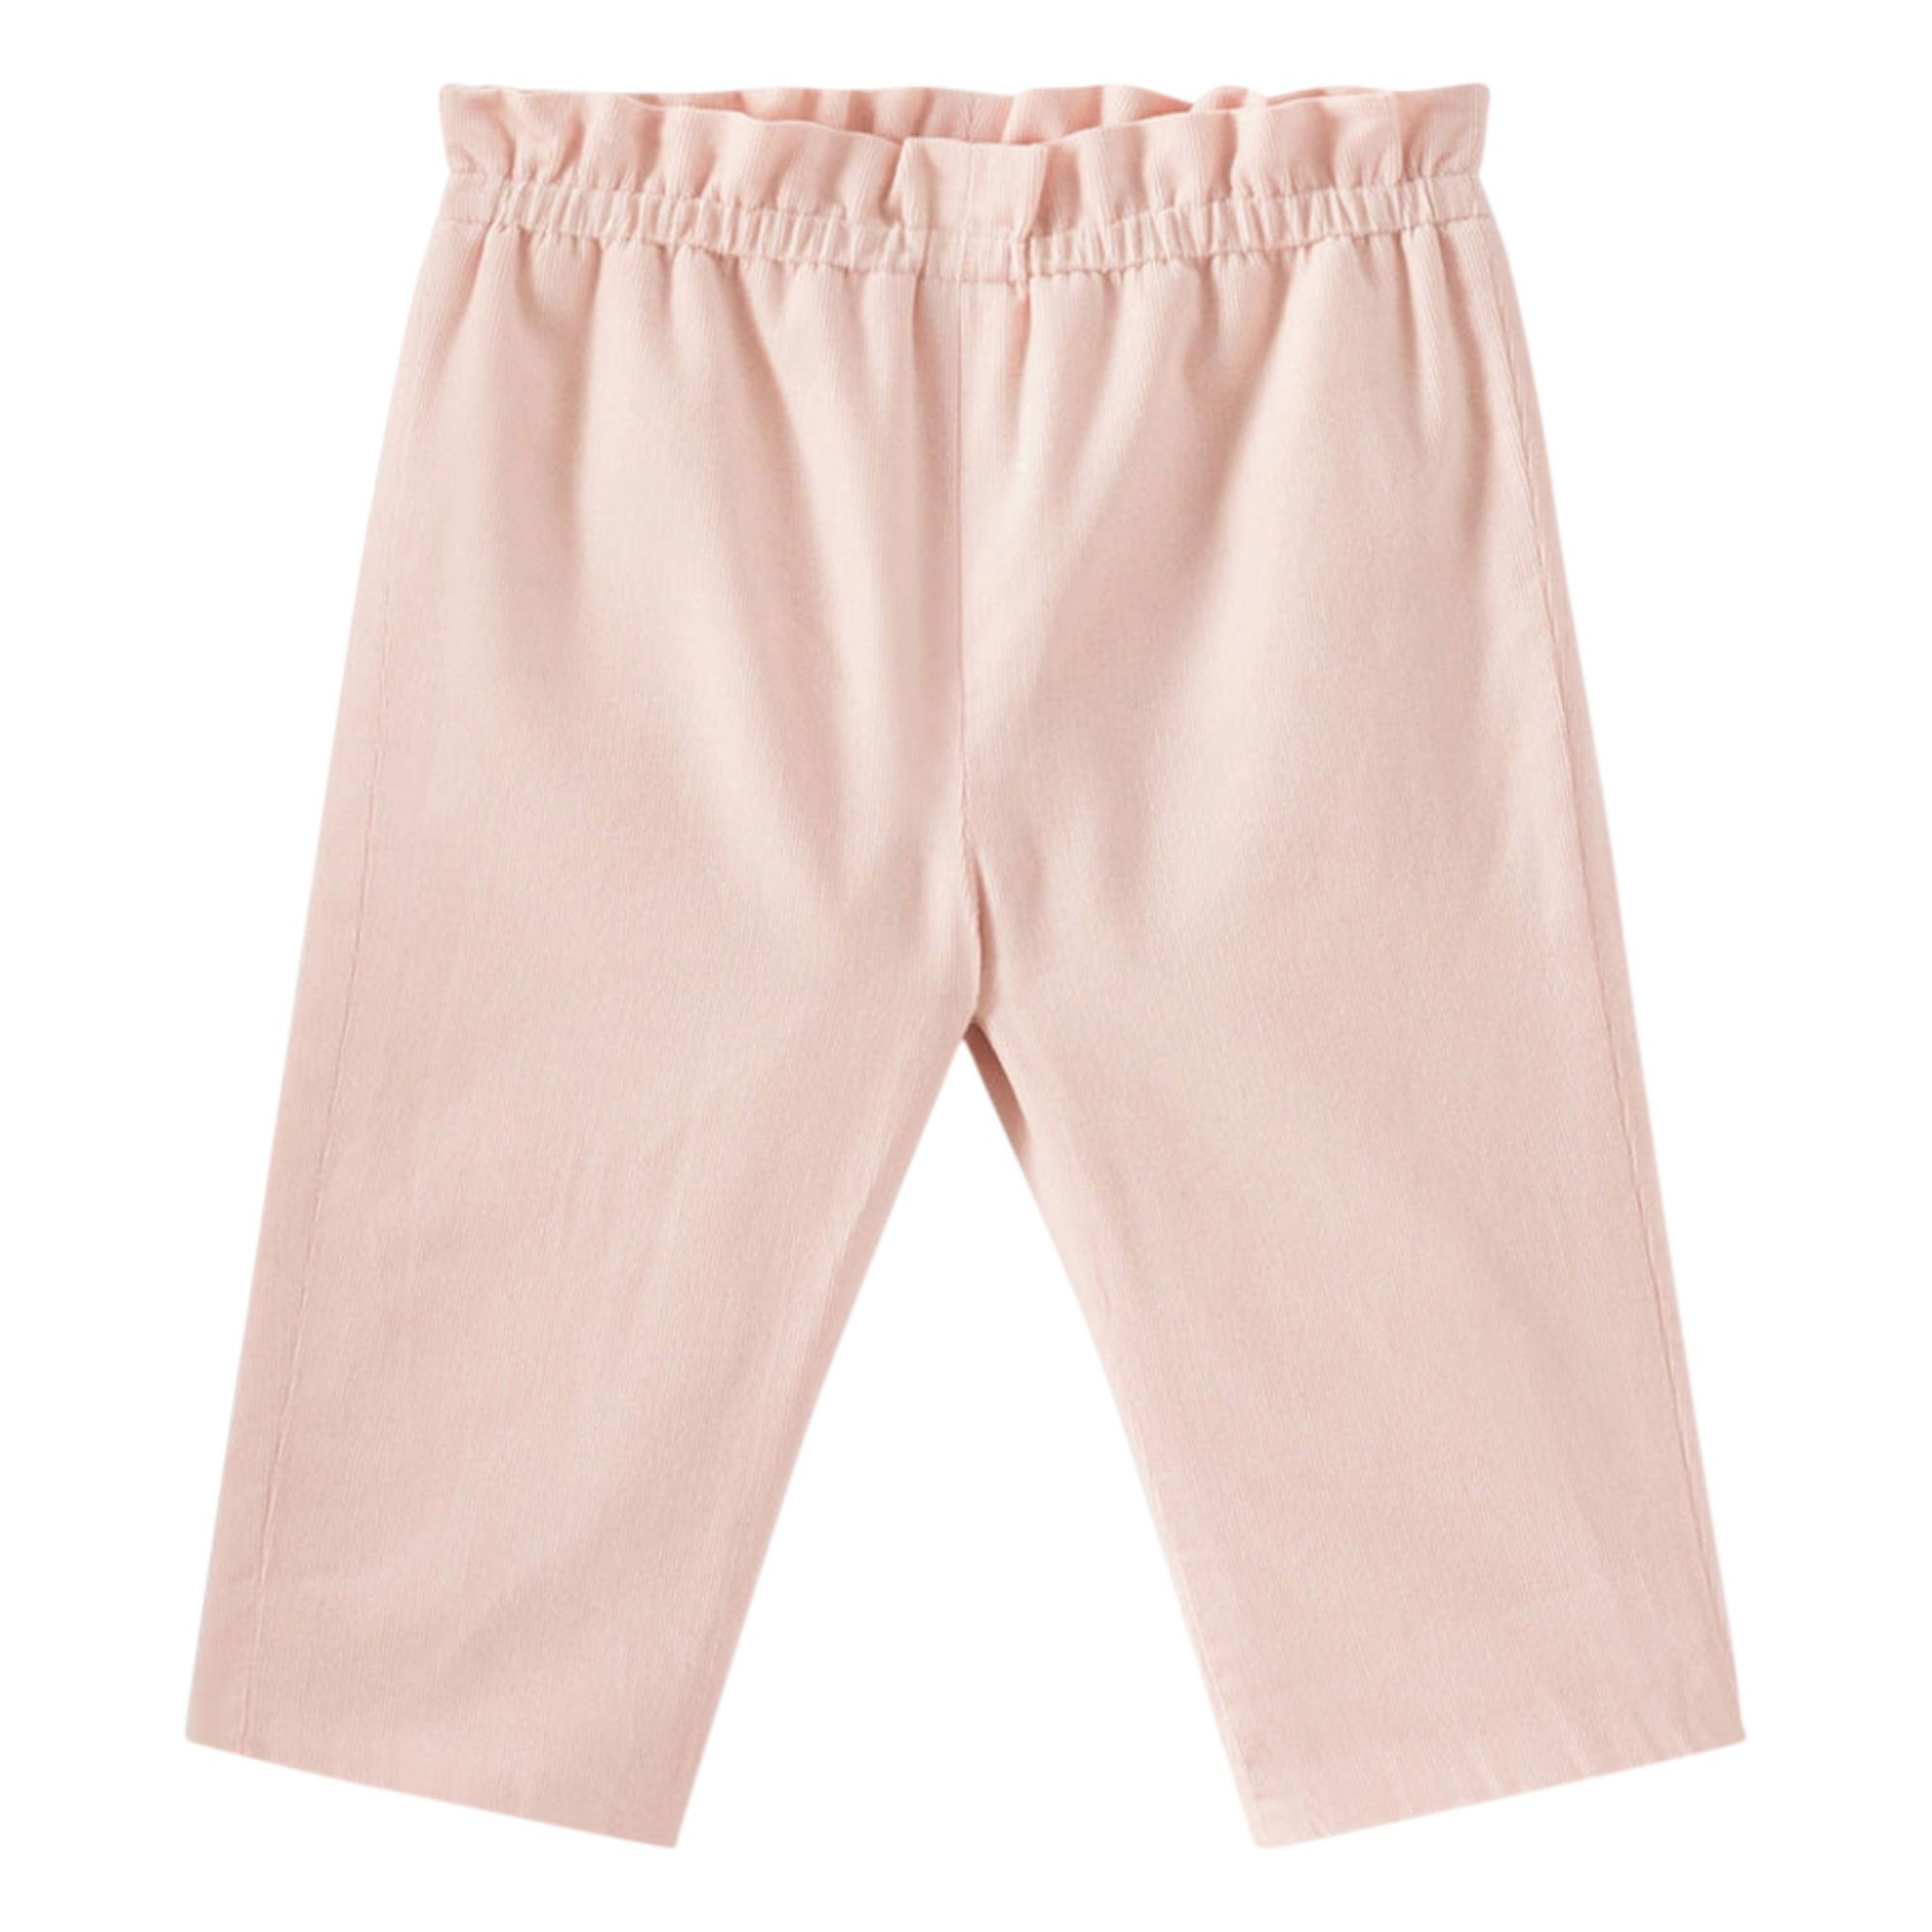 Bonpoint - Pantalon Velours Tweety - Fille - Rose pâle